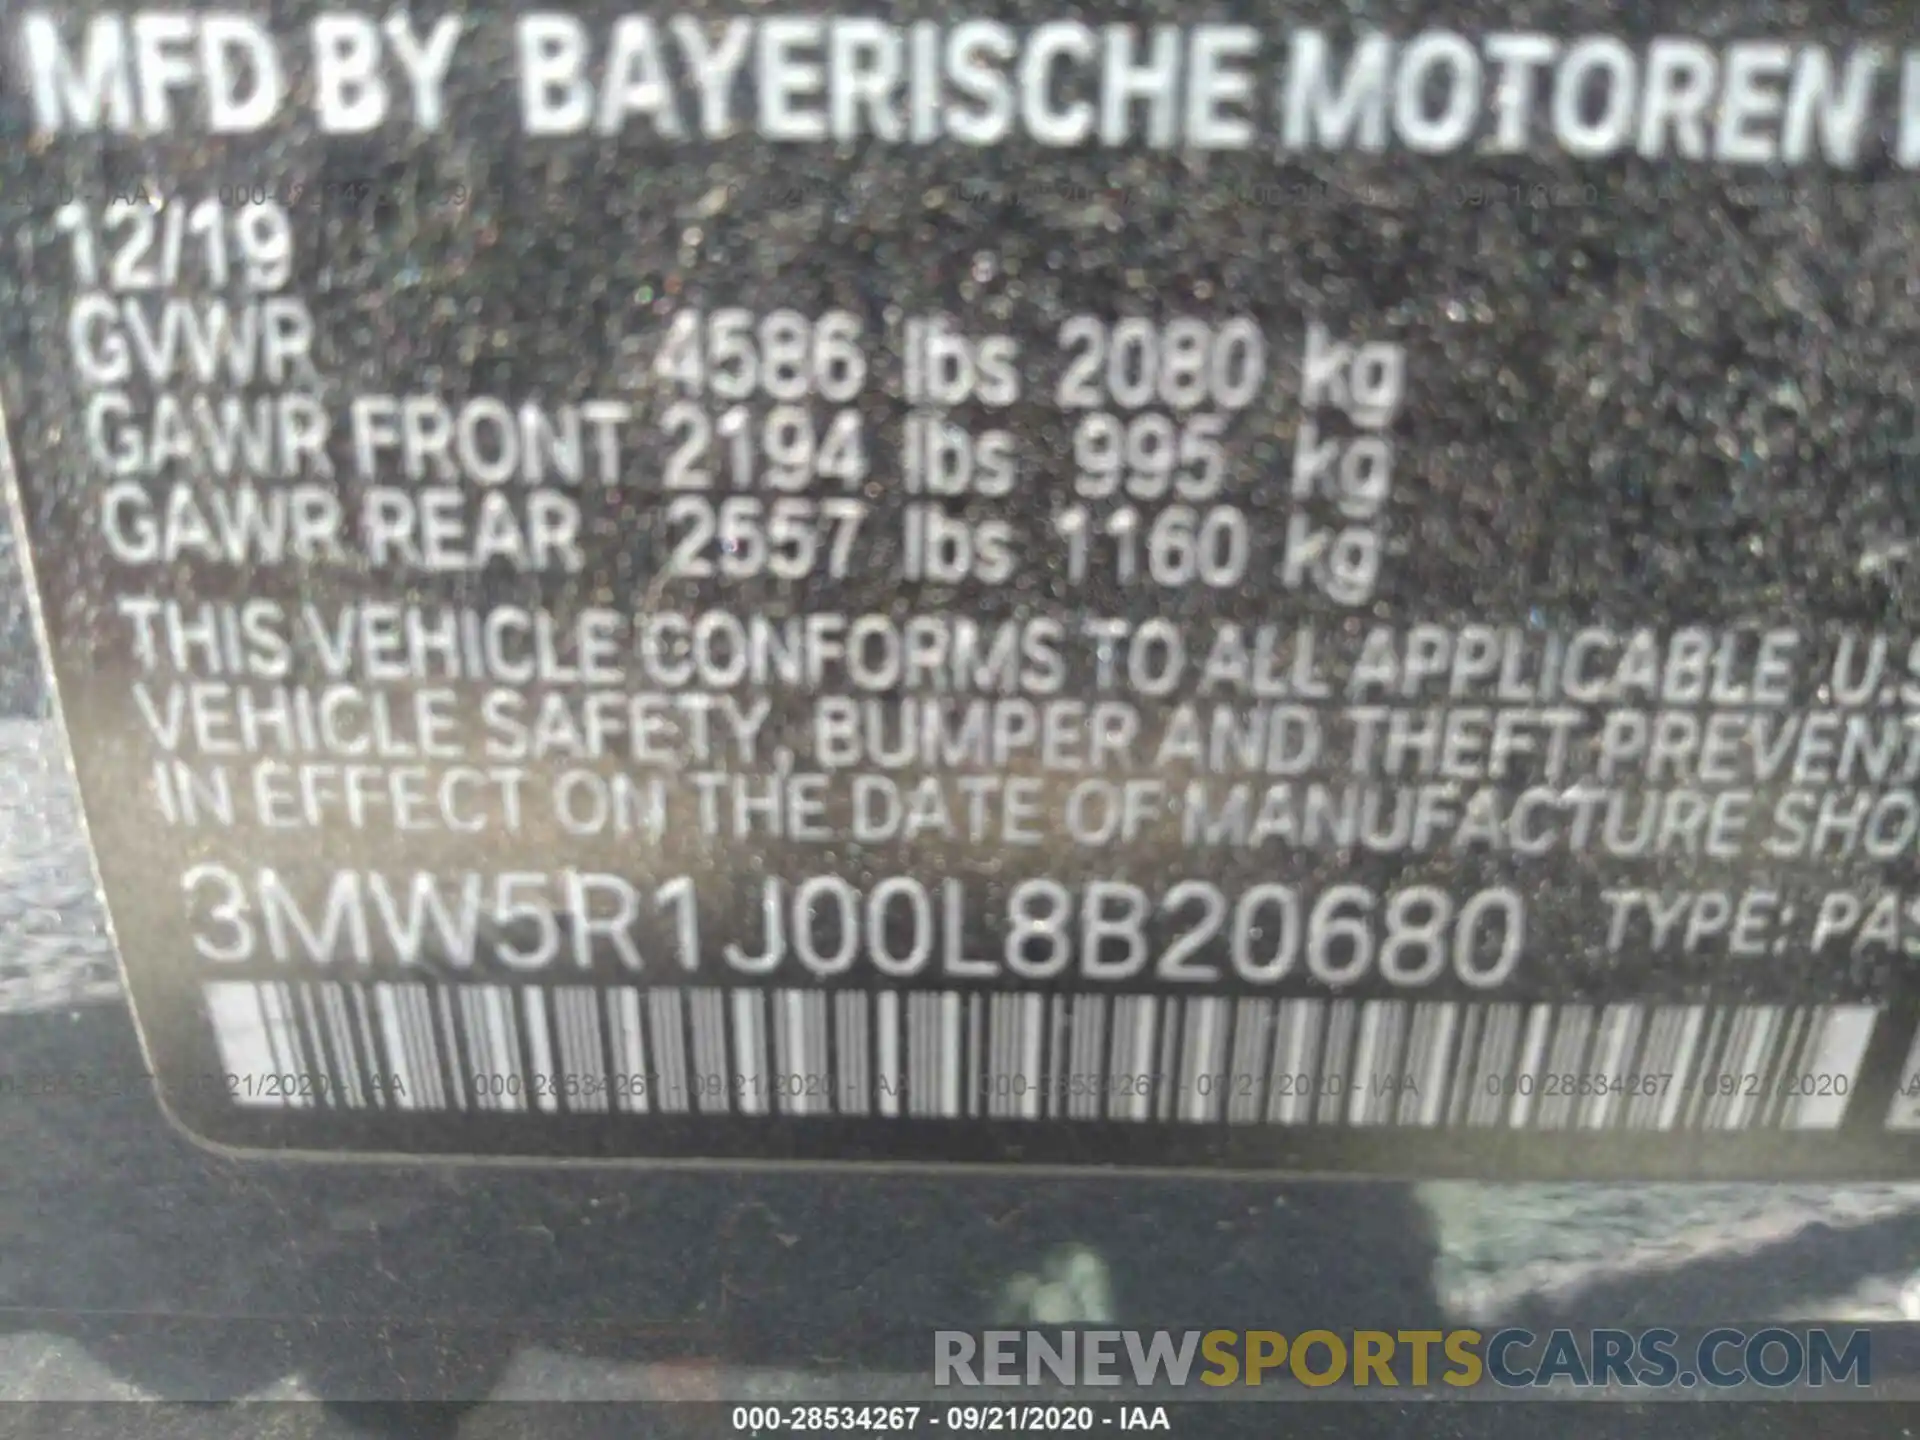 9 Photograph of a damaged car 3MW5R1J00L8B20680 BMW 3 SERIES 2020